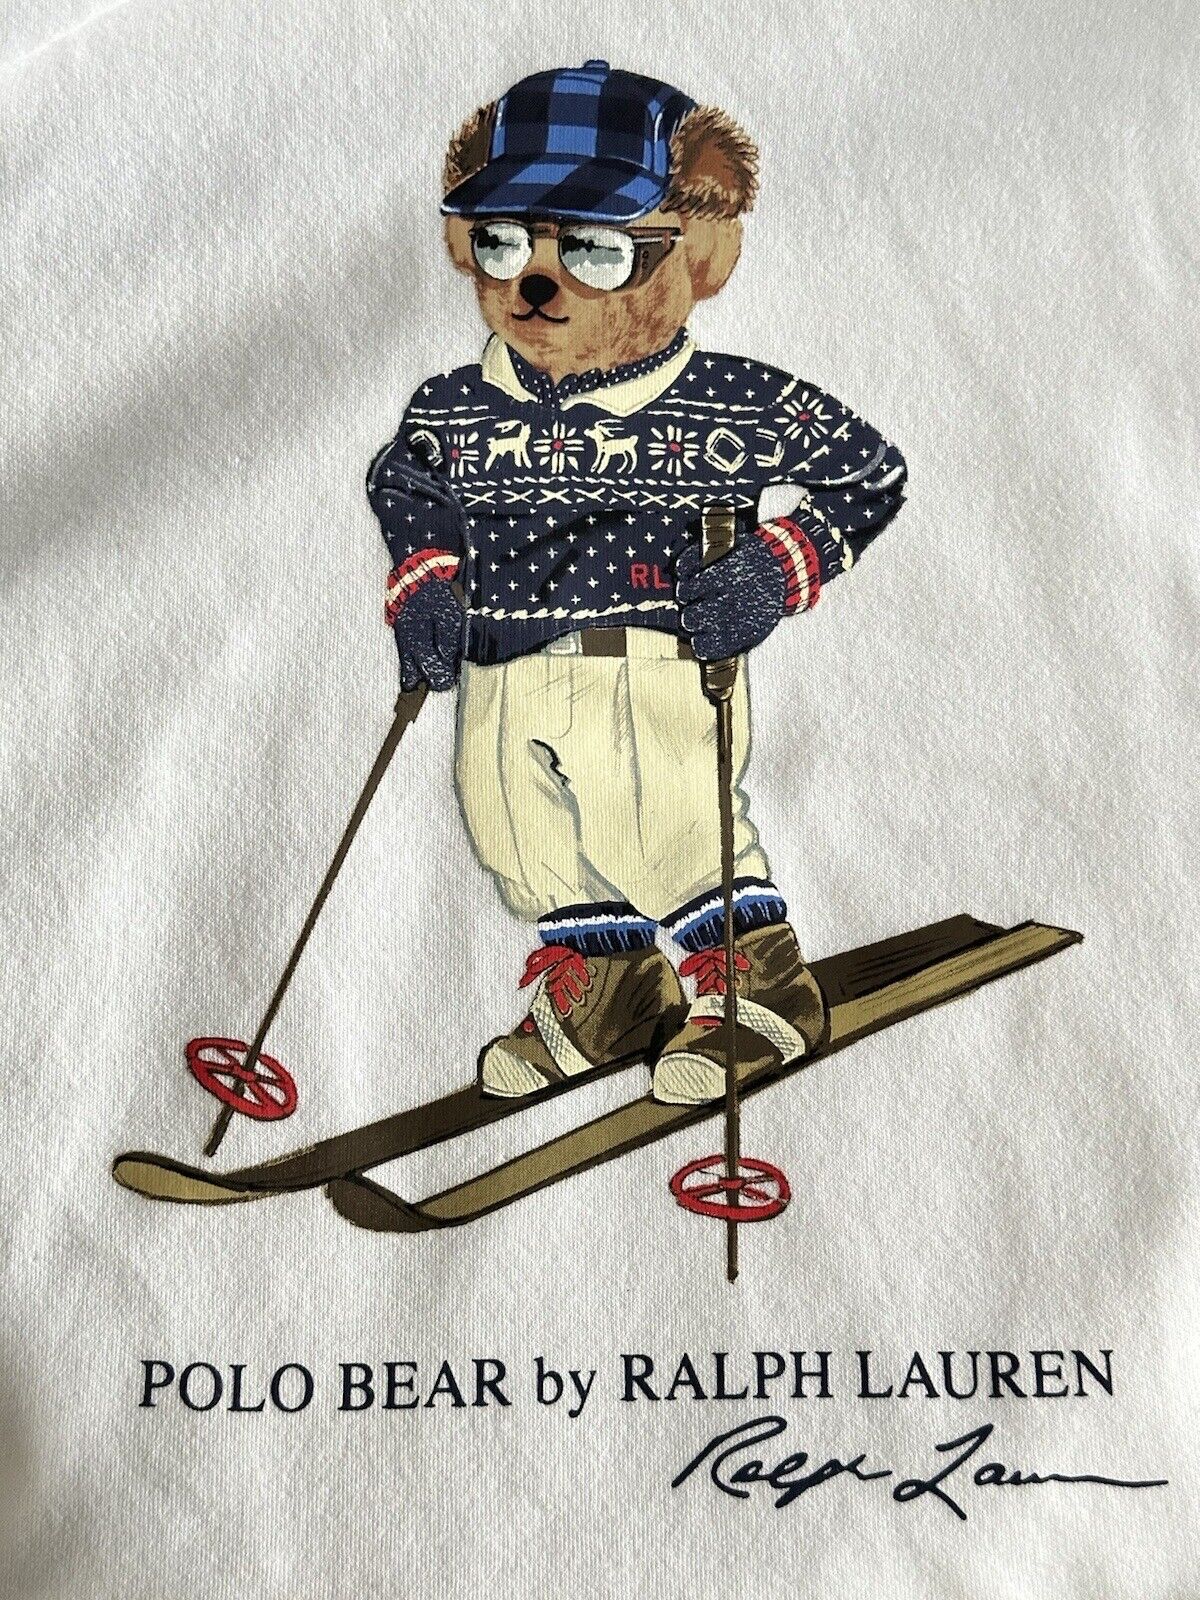 NWT $188 Polo Ralph Lauren Bear Sweatshirt with Hoodie White 3XLT/3TGL